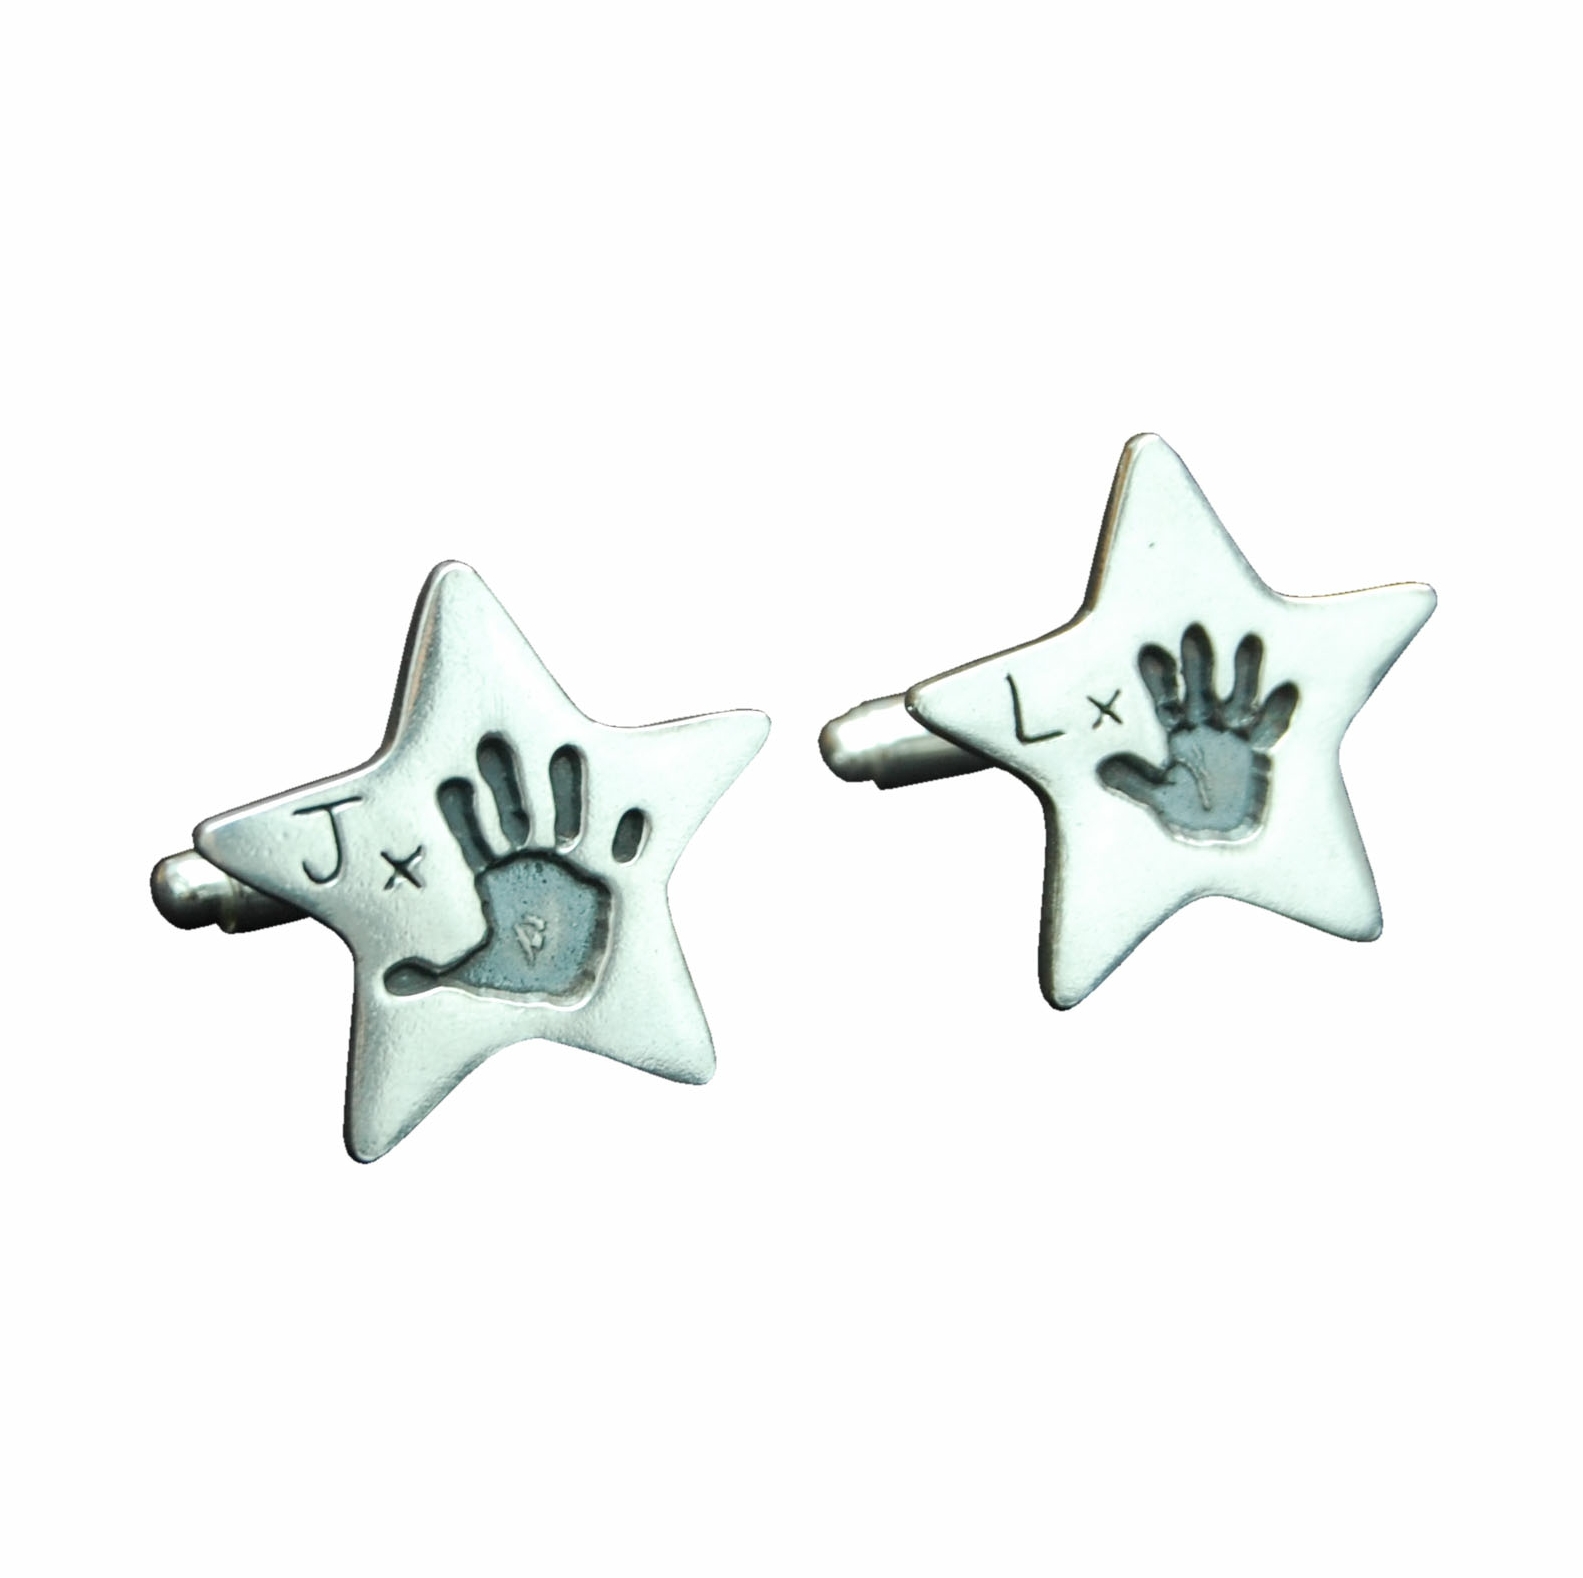 Silver star handprint cufflinks